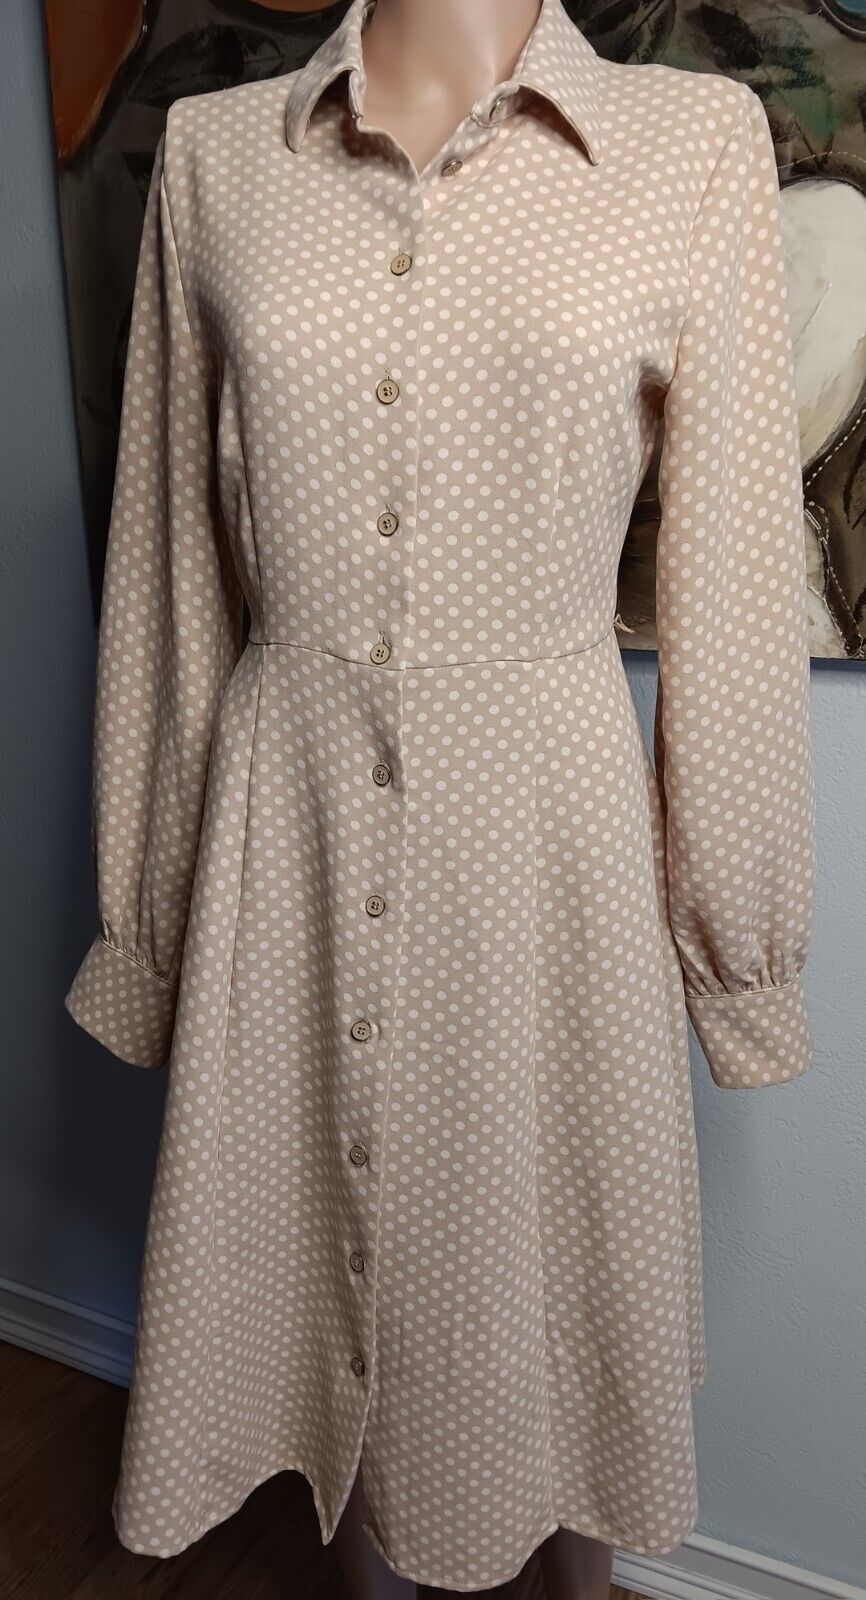 EVA MENDES NY & Co Long Sleeve Polka Dot Career Button Down Coat Dress Size 6